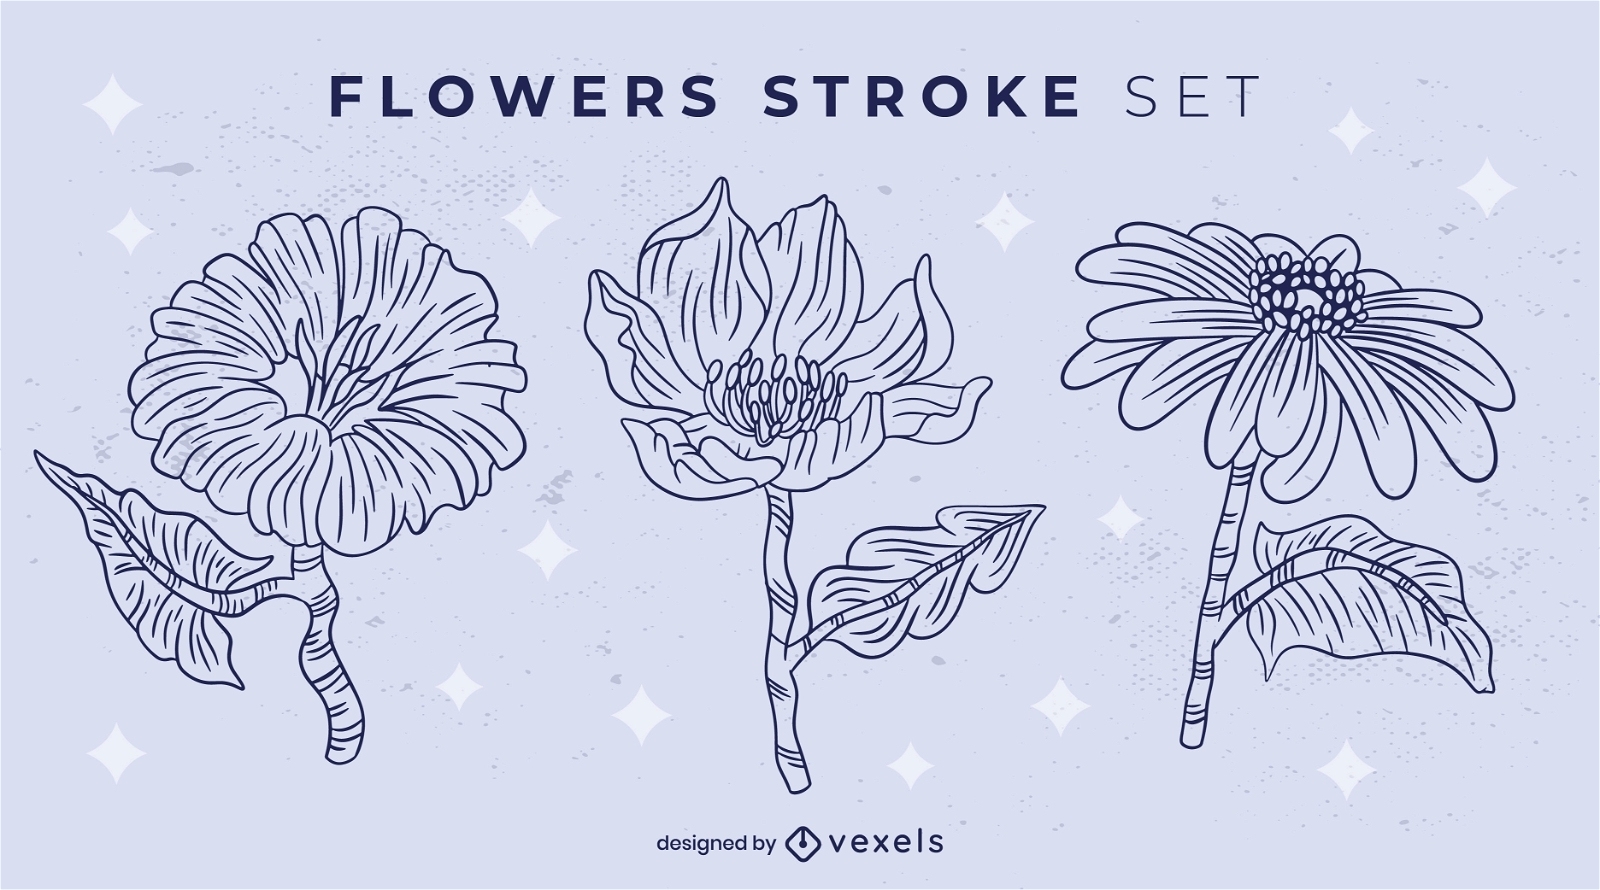 Flowers stroke illustration set design